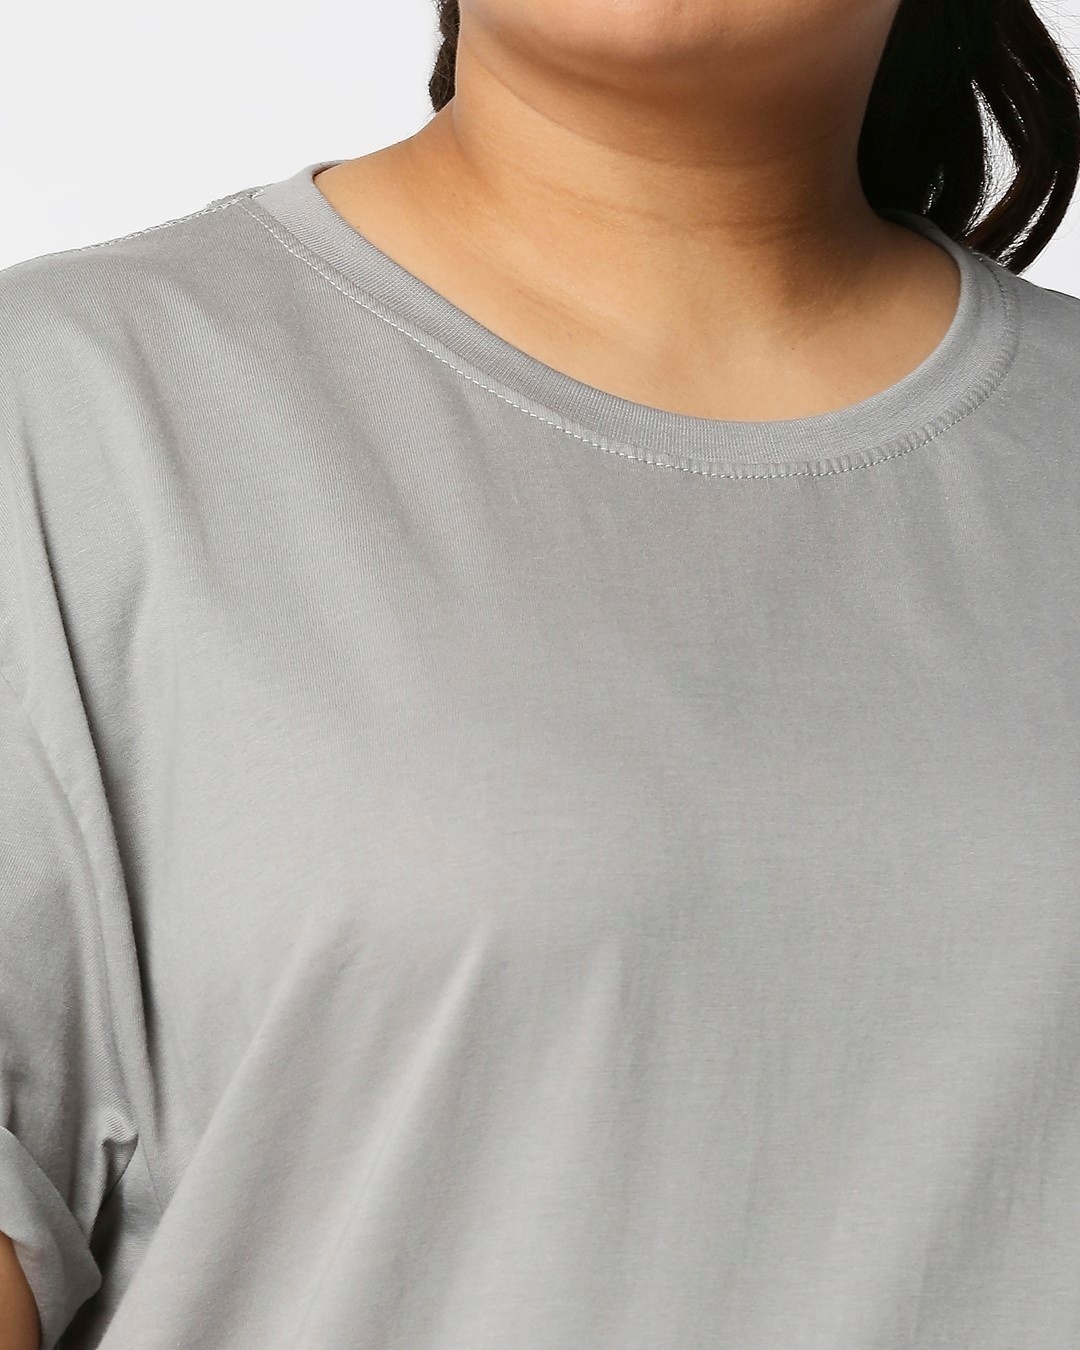 Shop Meteor Grey Boyfriend Plus Size T-Shirt